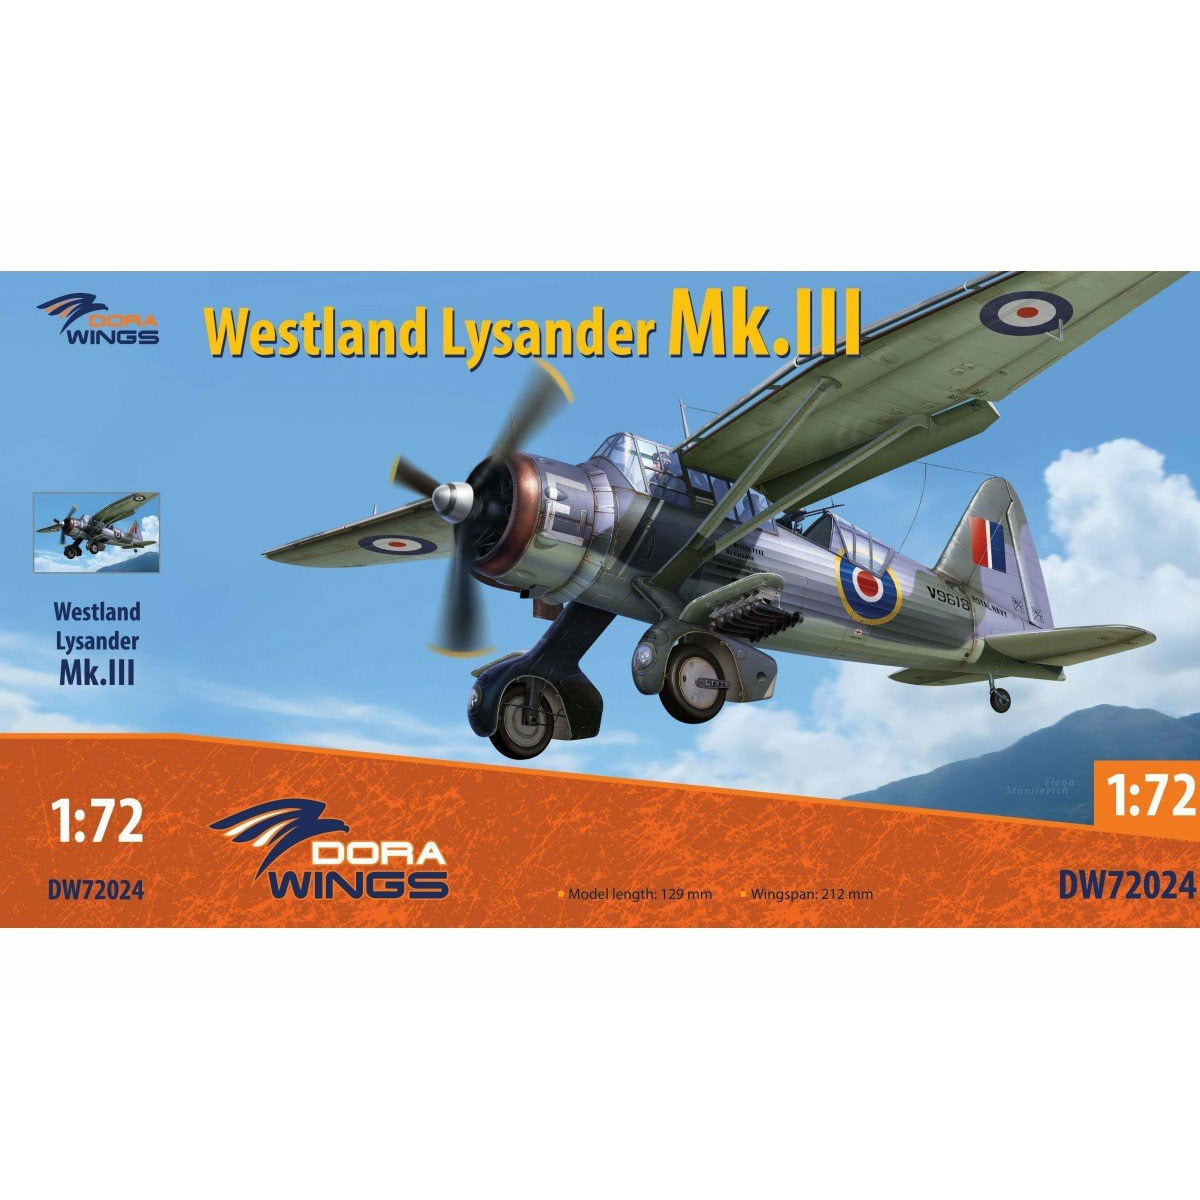 Westland Lysander Mk.III 1/72 #DW72024 by Dora Wings